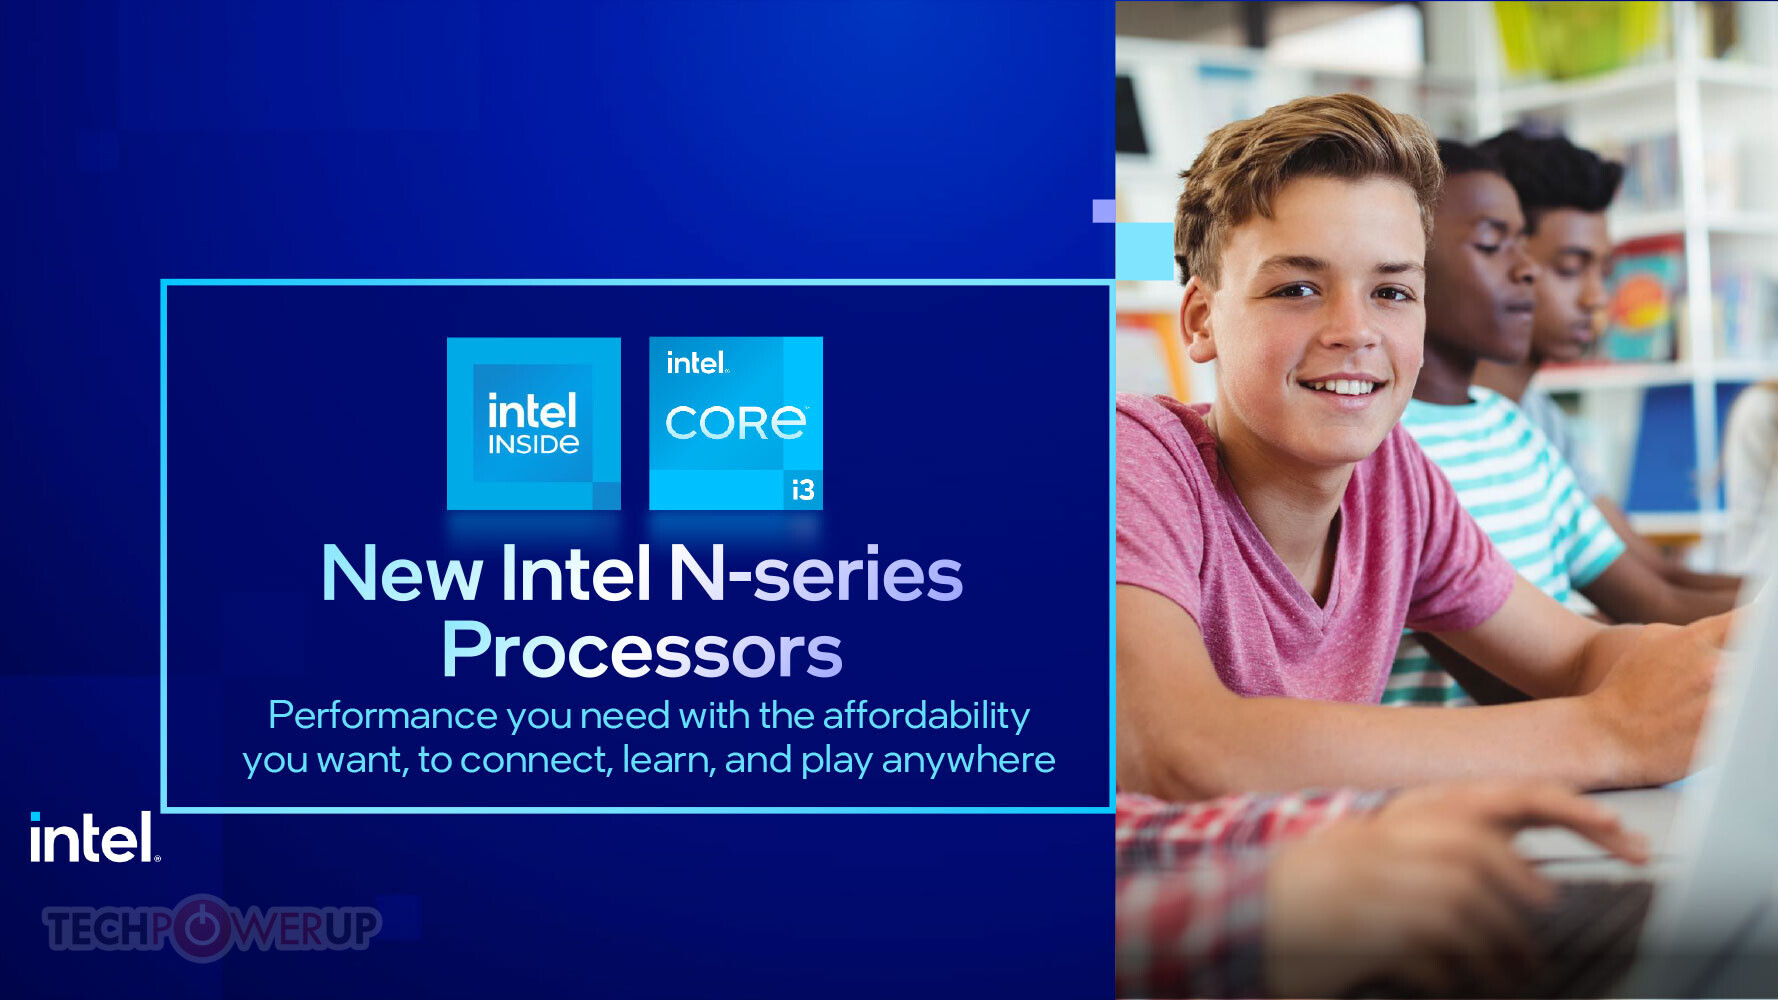 Meet Intel Processor and Core-i3 N-series Alder Lake N-series processors  - CNX Software